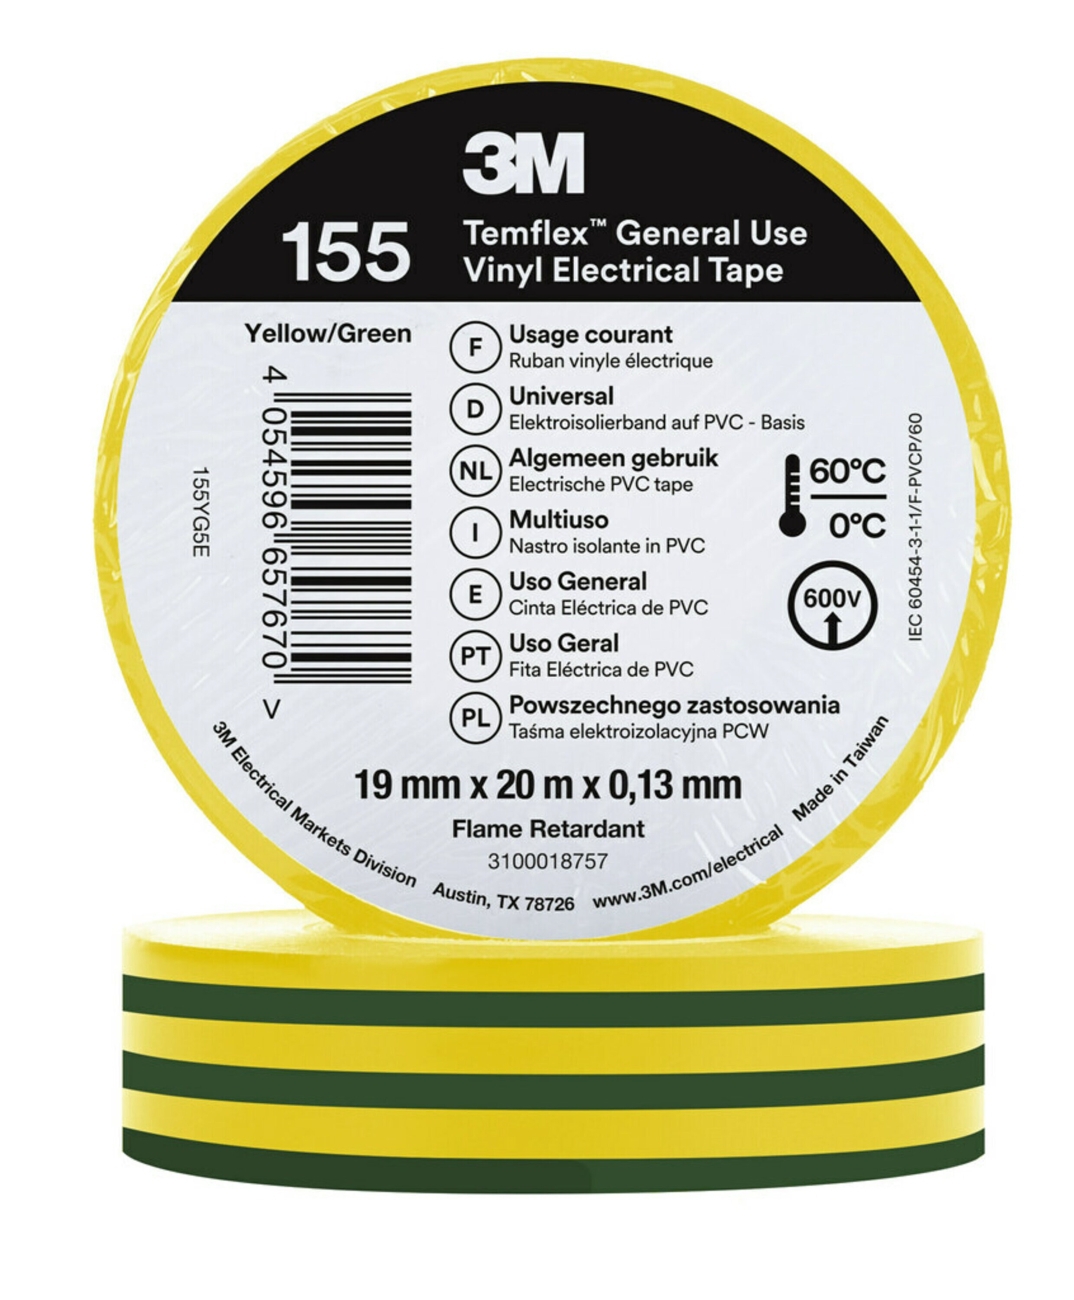 3M Temflex 155 vinyl electrical insulating tape, green/yellow, 19 mm x 20 m, 0.13 mm